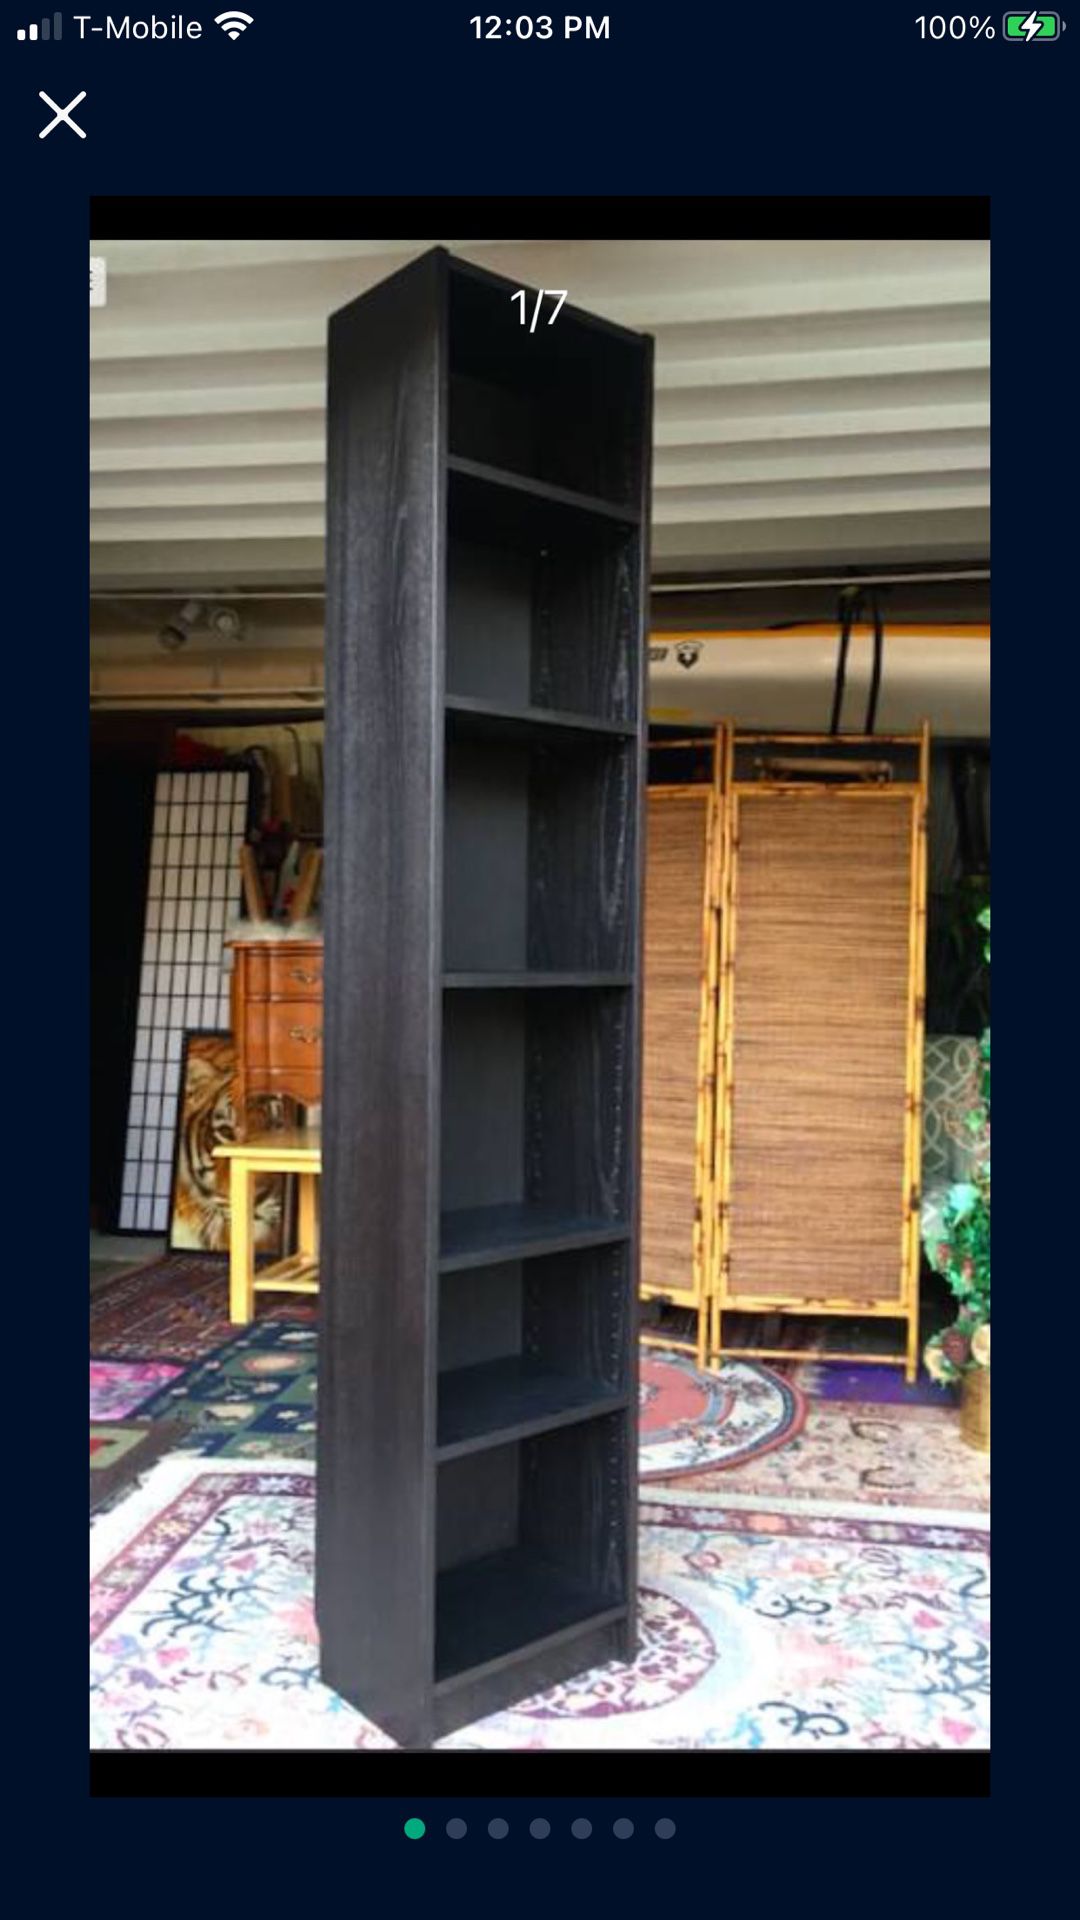 Storage Tall Shelf-Tall Slim Black Shelf - adjustable shelves - 80"H x 18"W x 11"D - Excellent condition